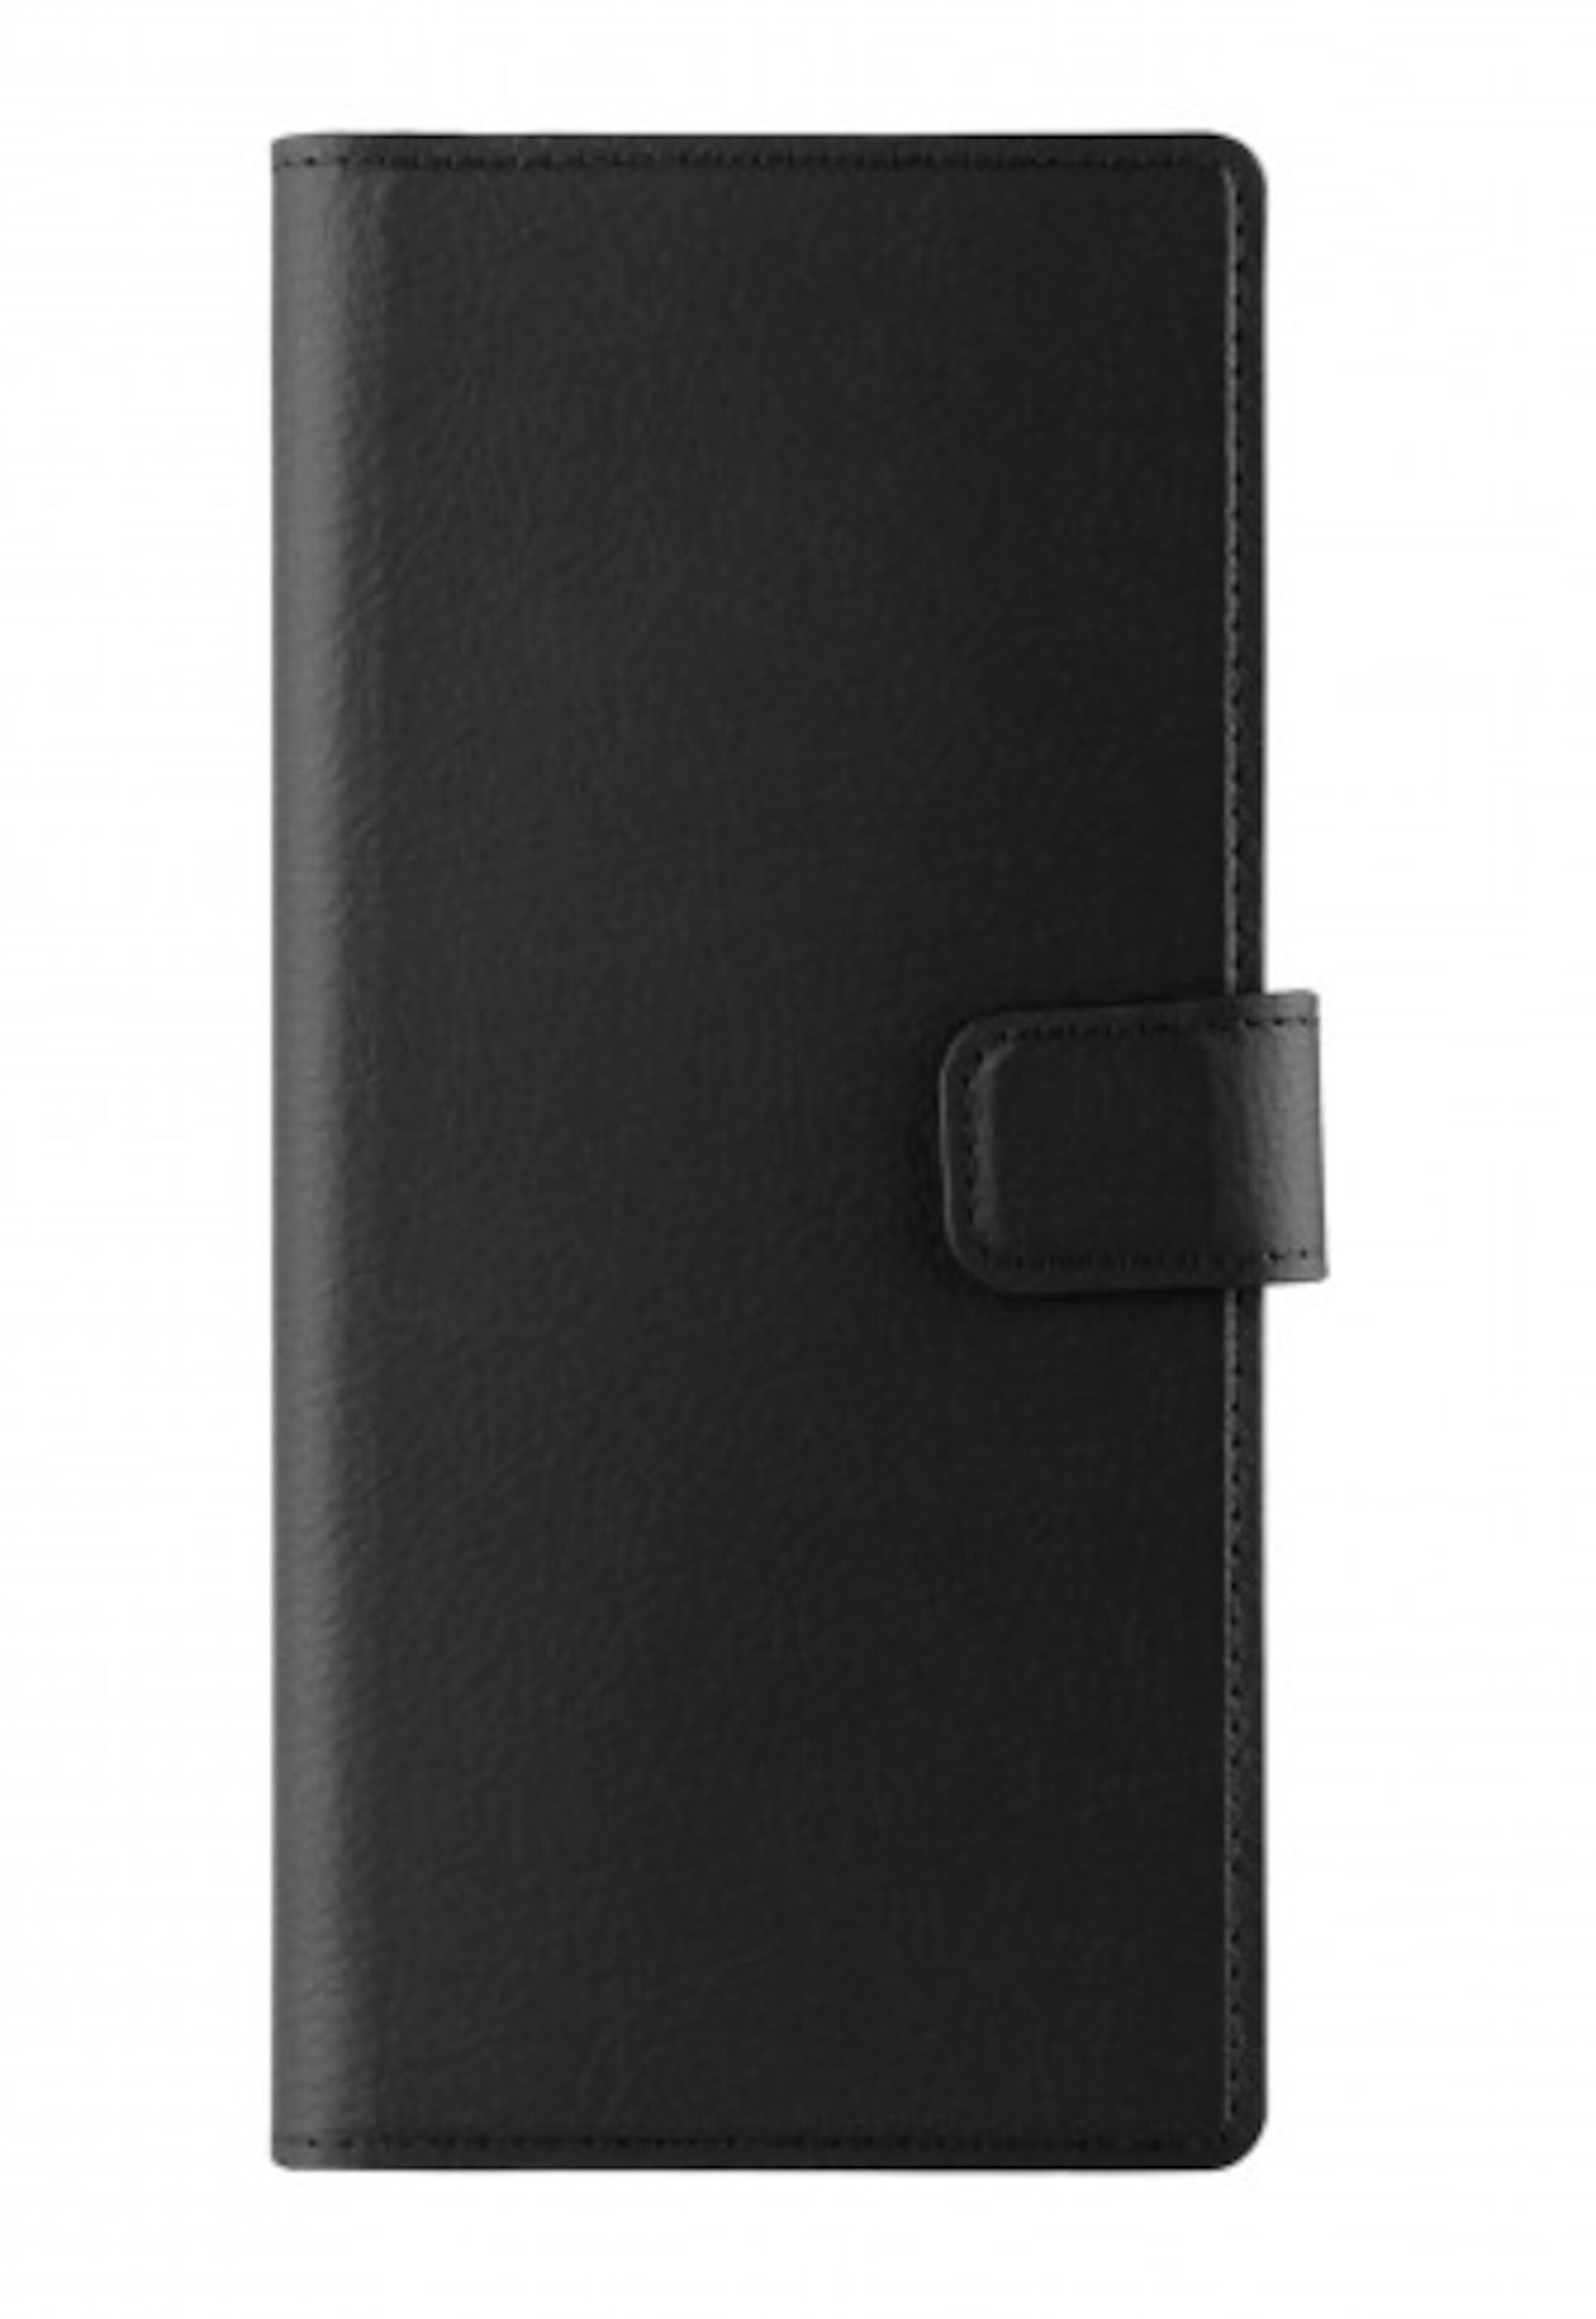 Mobilplånbok för Galaxy Note 8